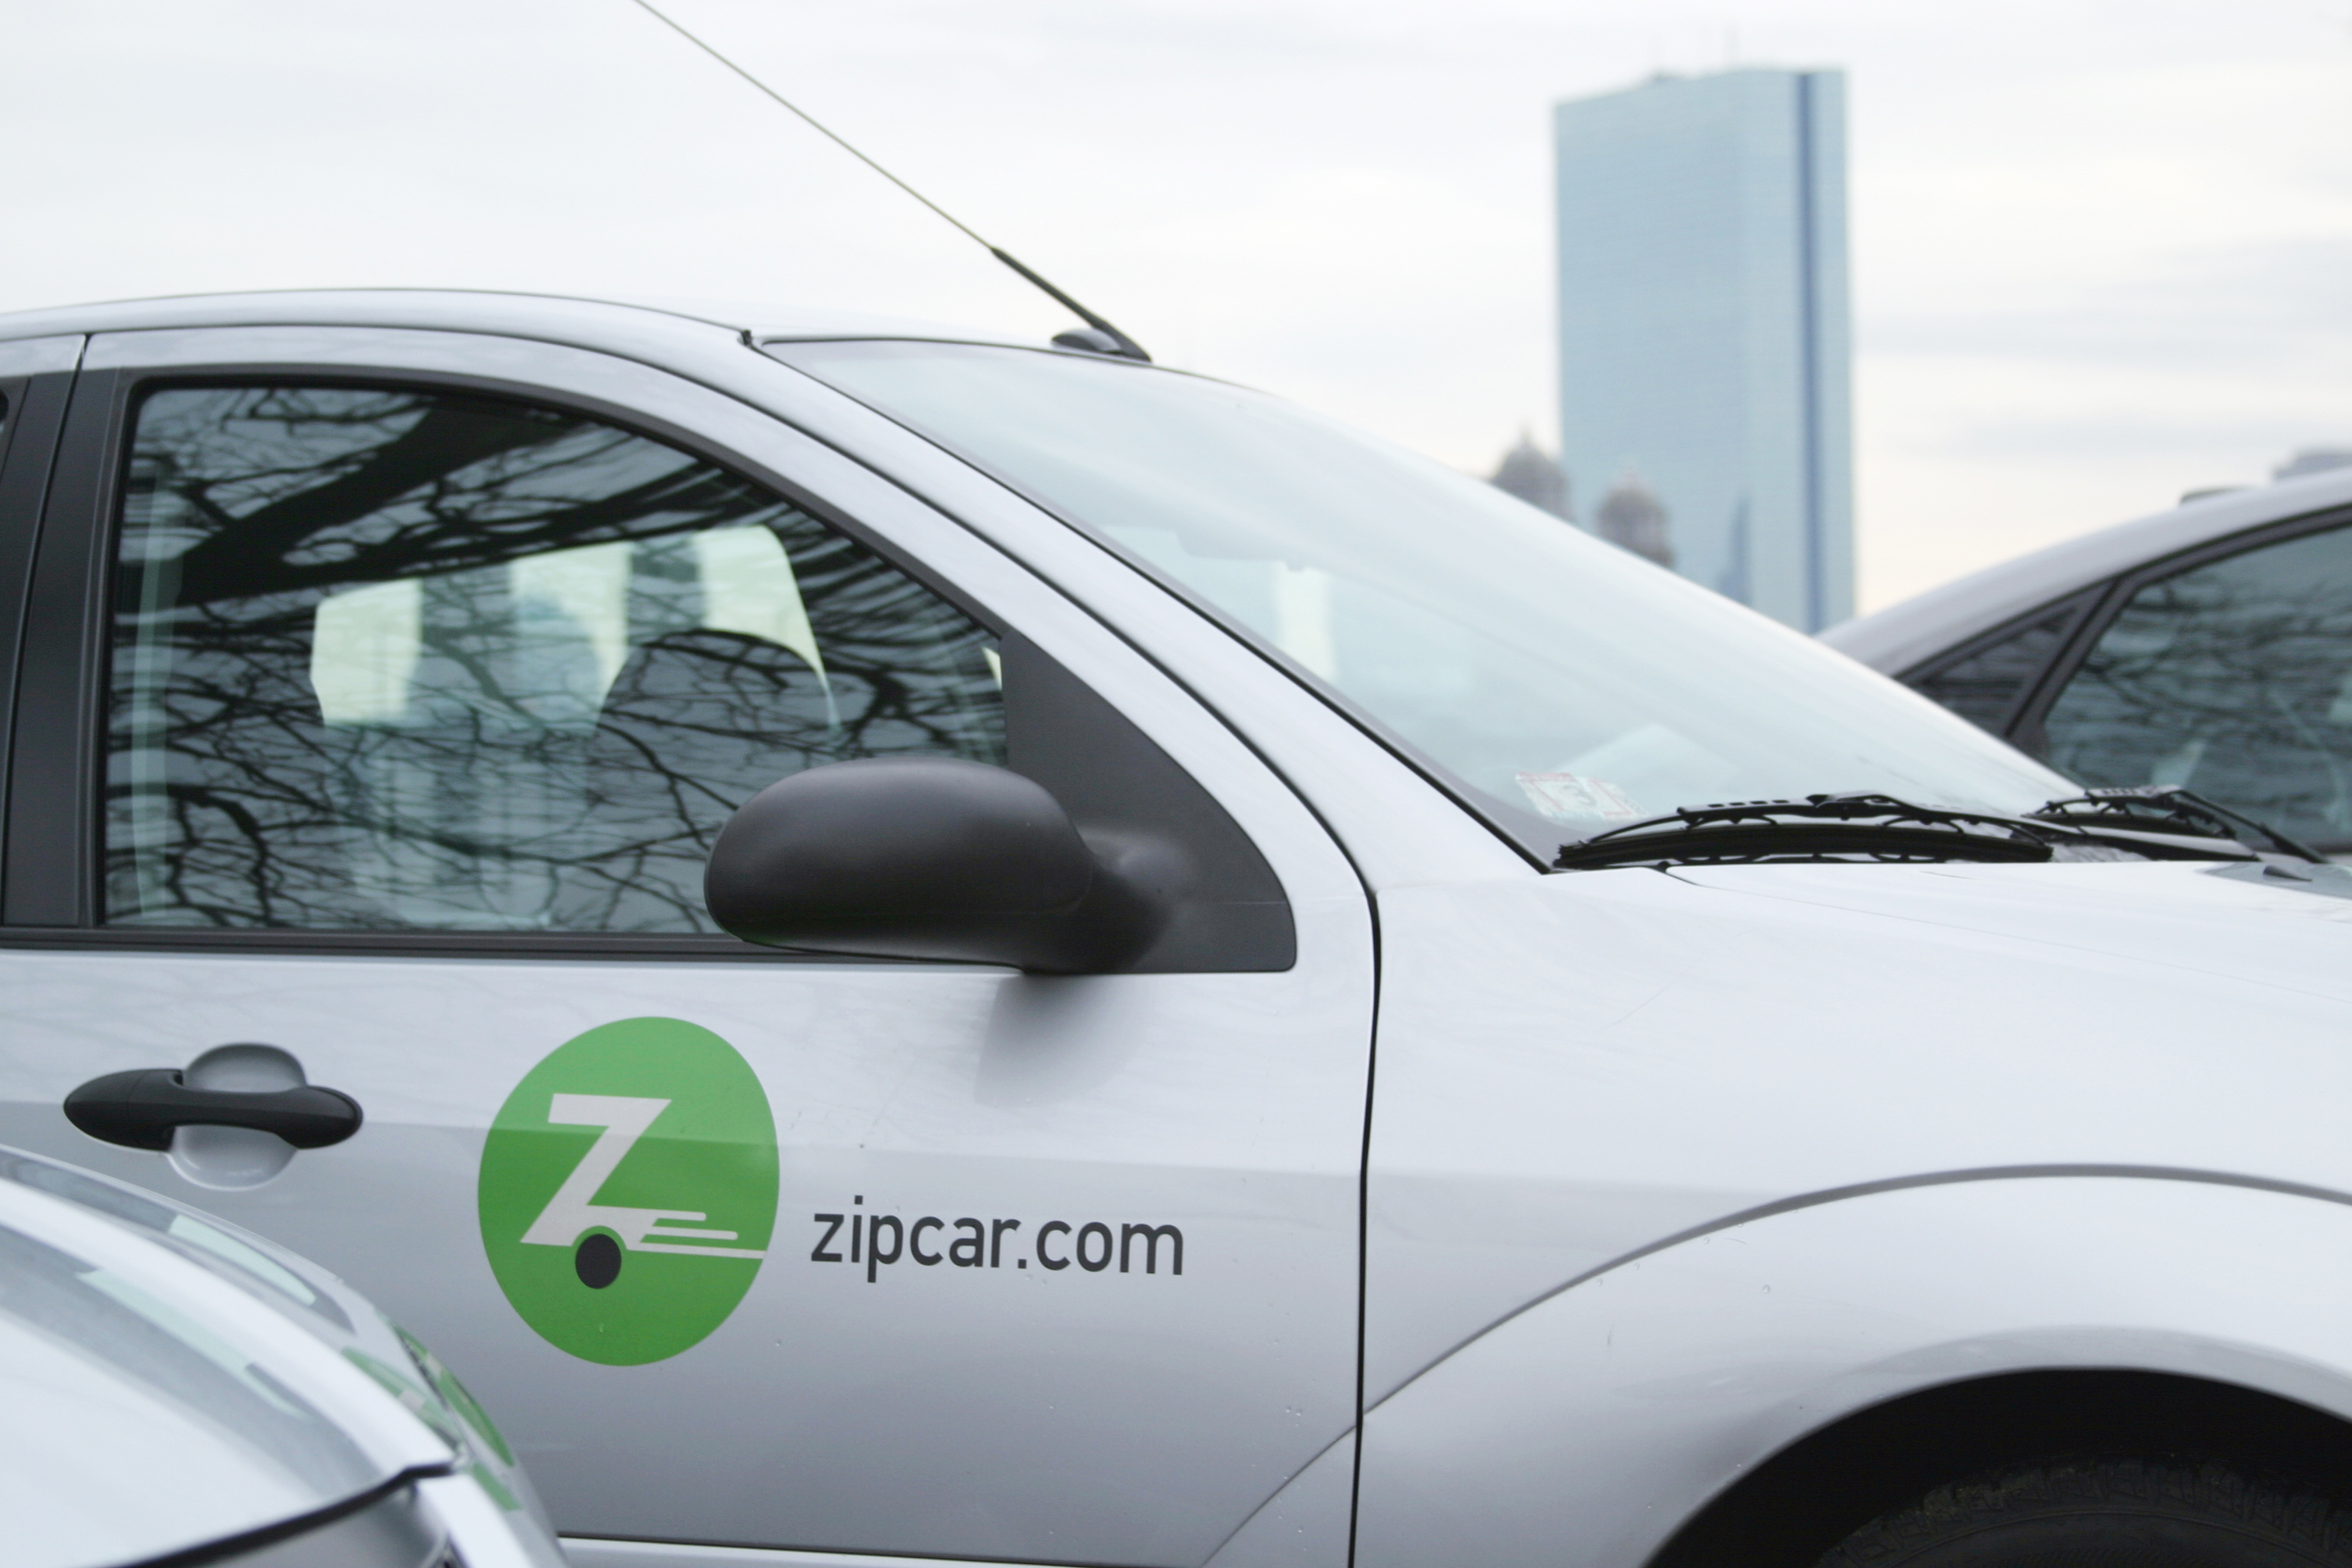 zipcar support